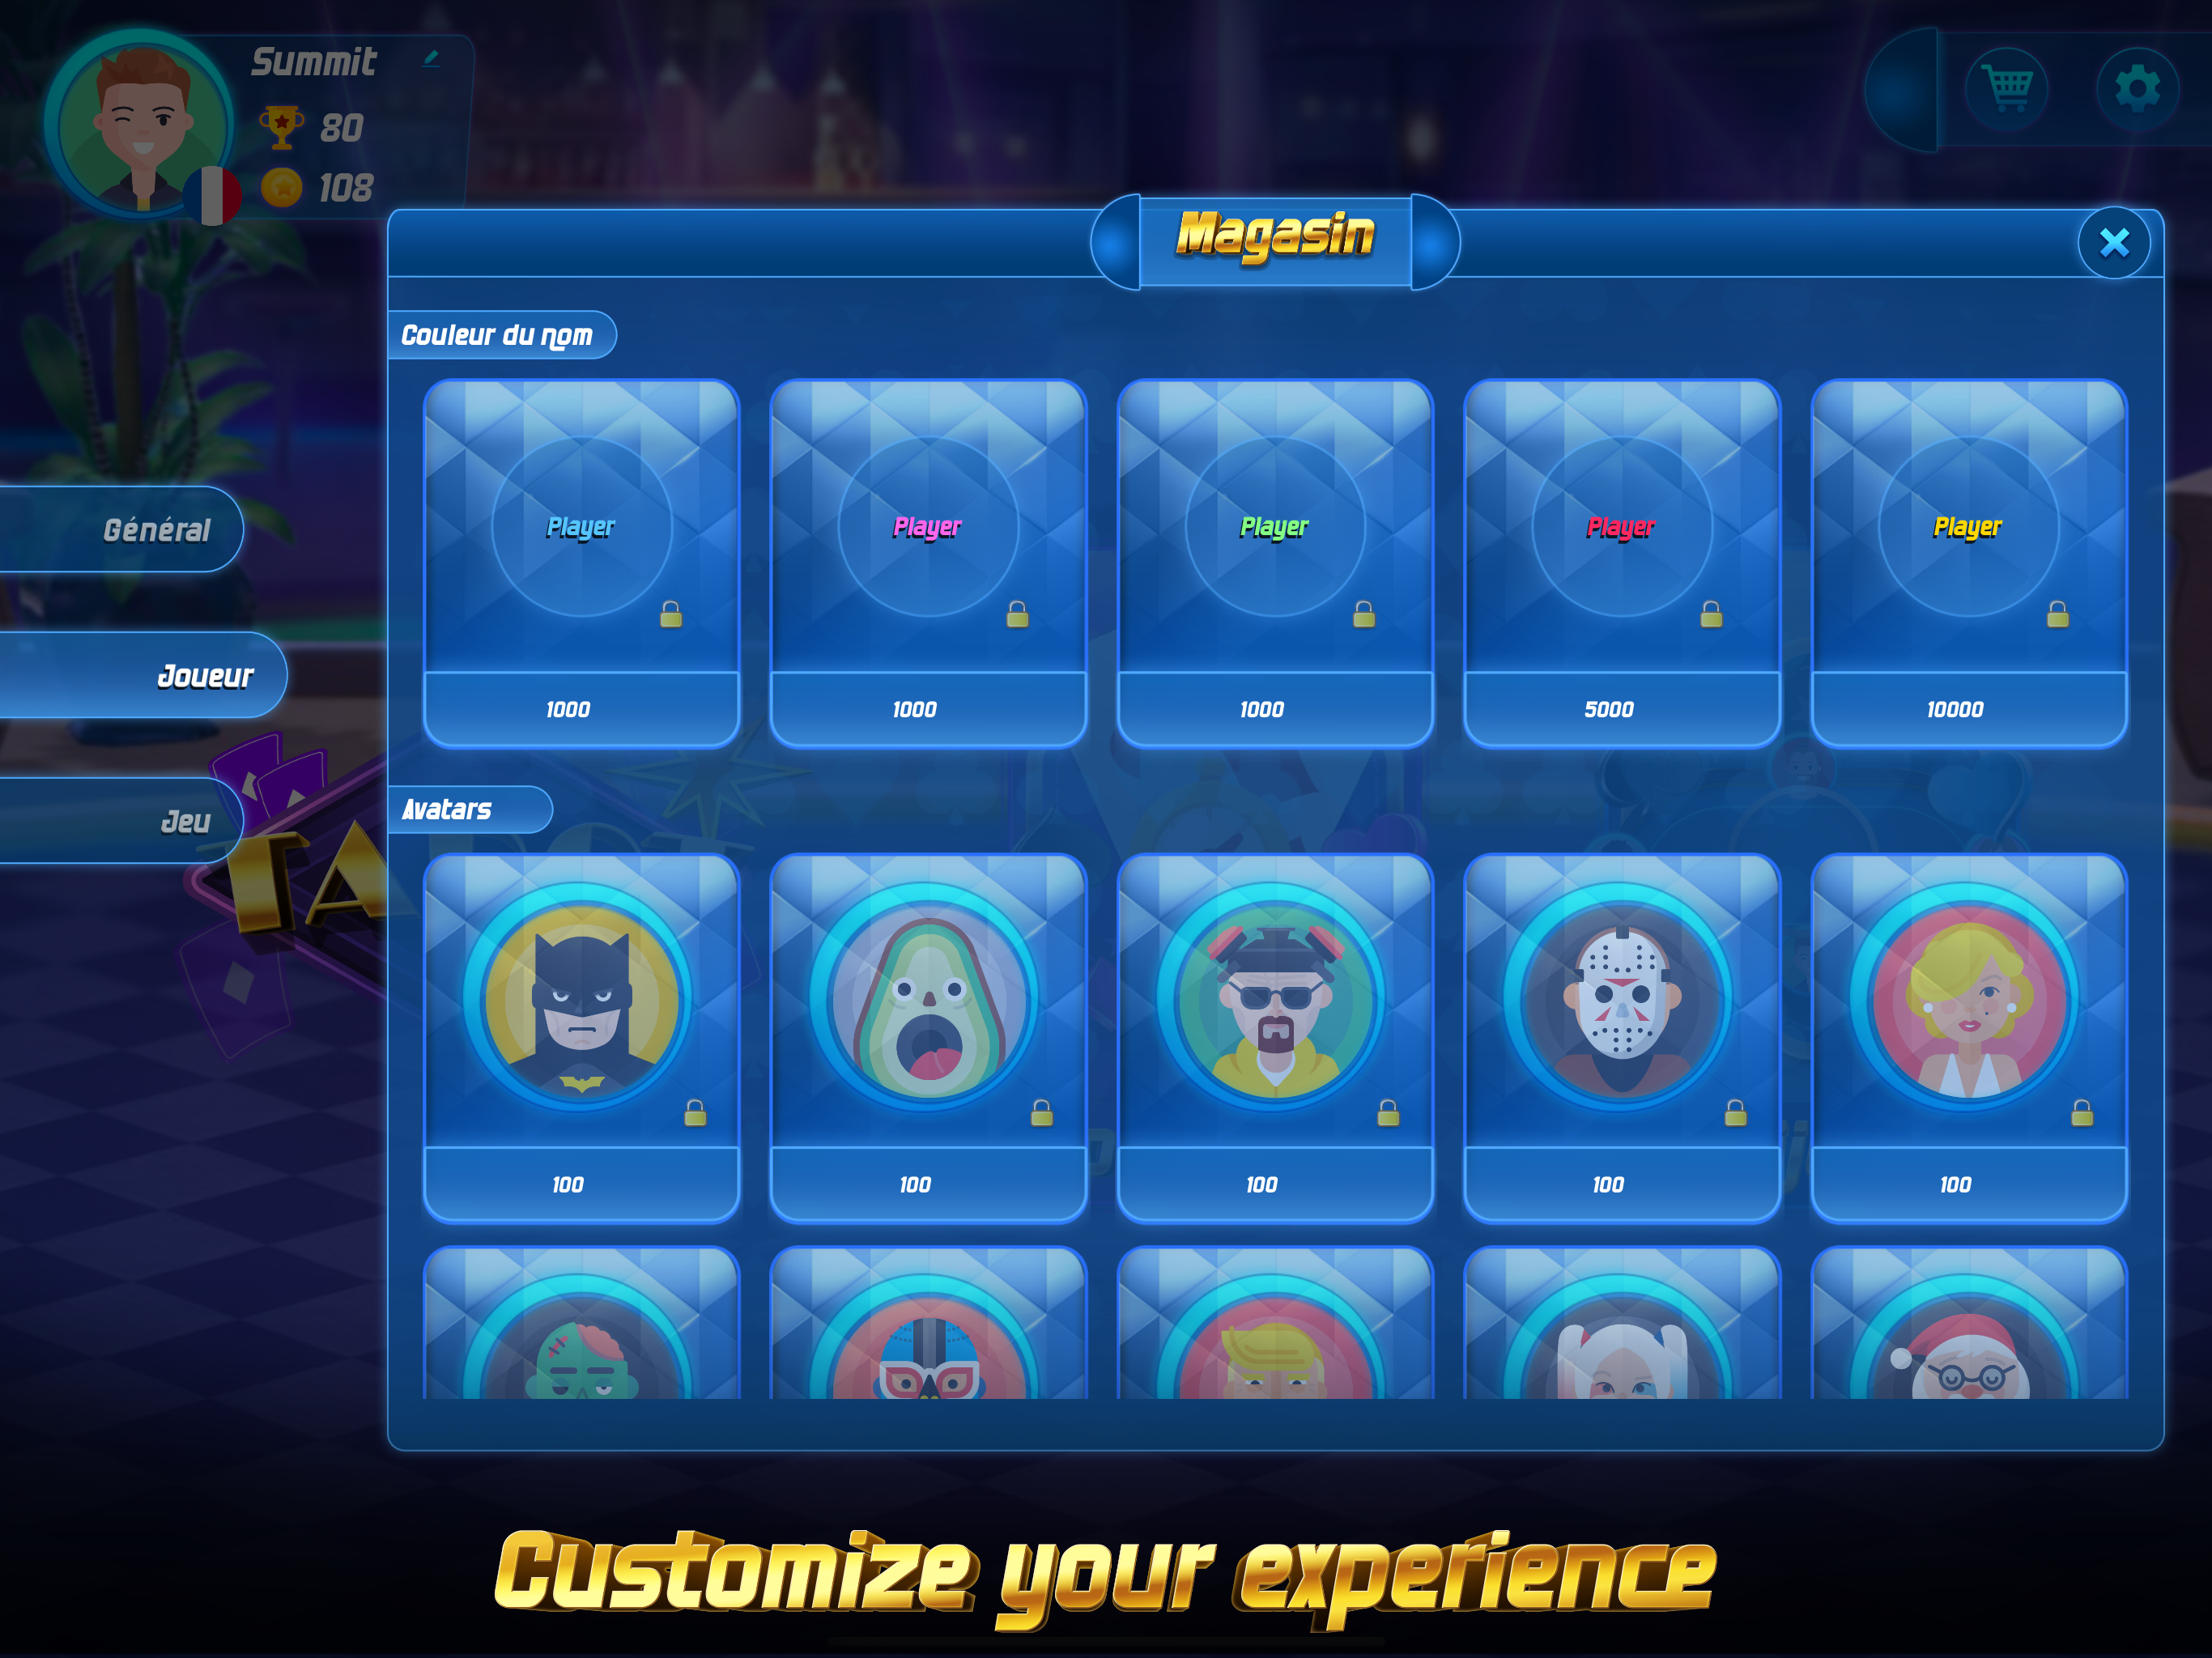 Screenshot of Tarot online card game